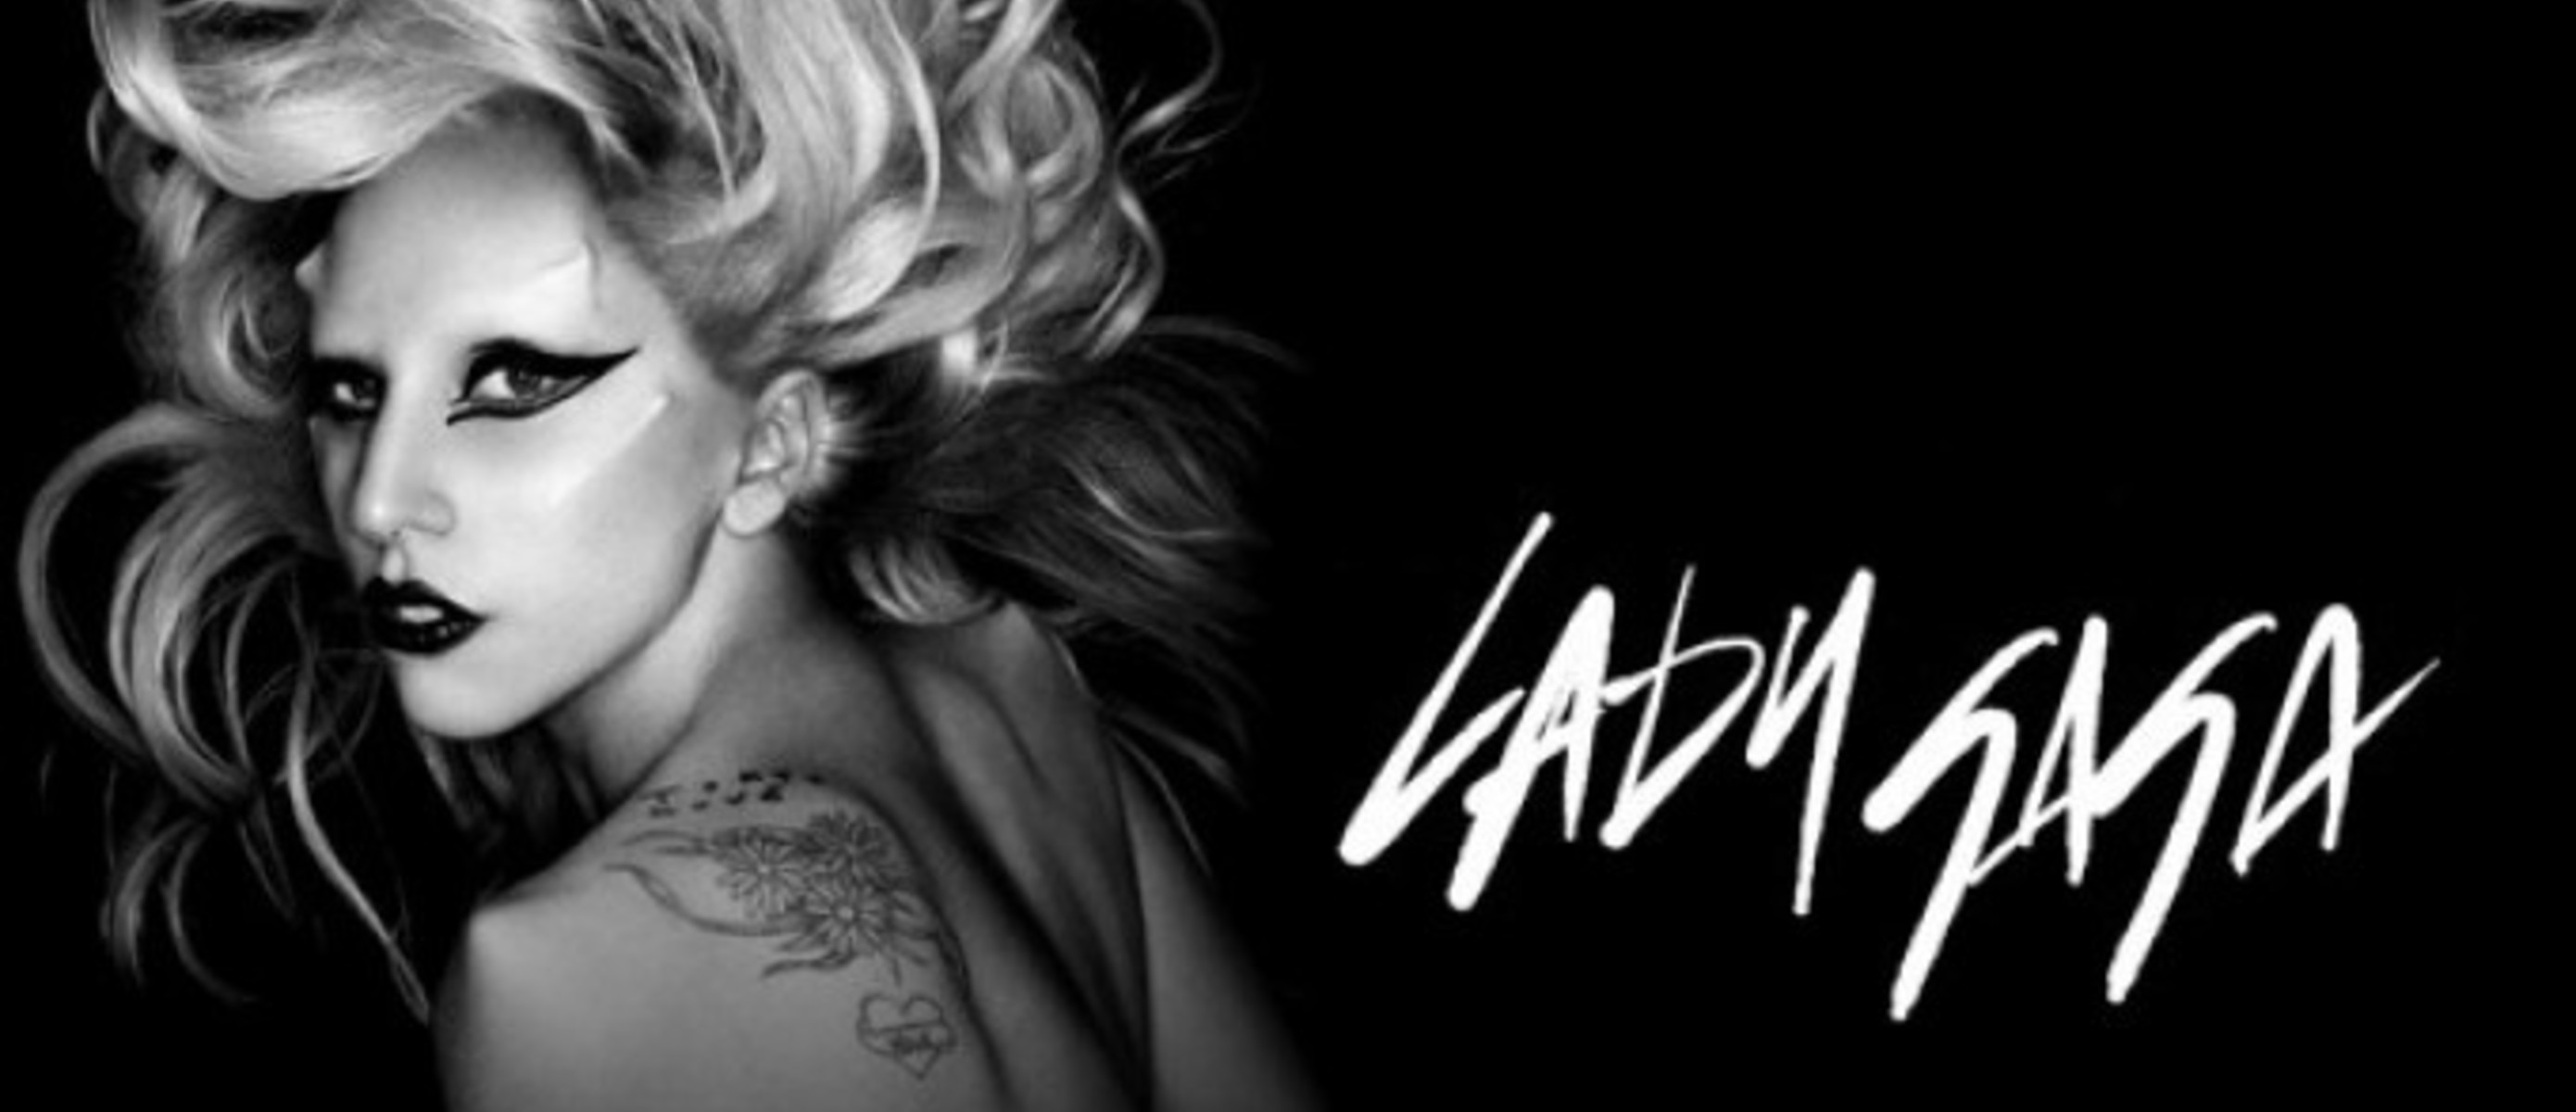 Lady gaga dj tons. Леди Гага Борн ЗИС Вей. Леди Гага альбомы. Born this way альбом. 2011 - Born this way.